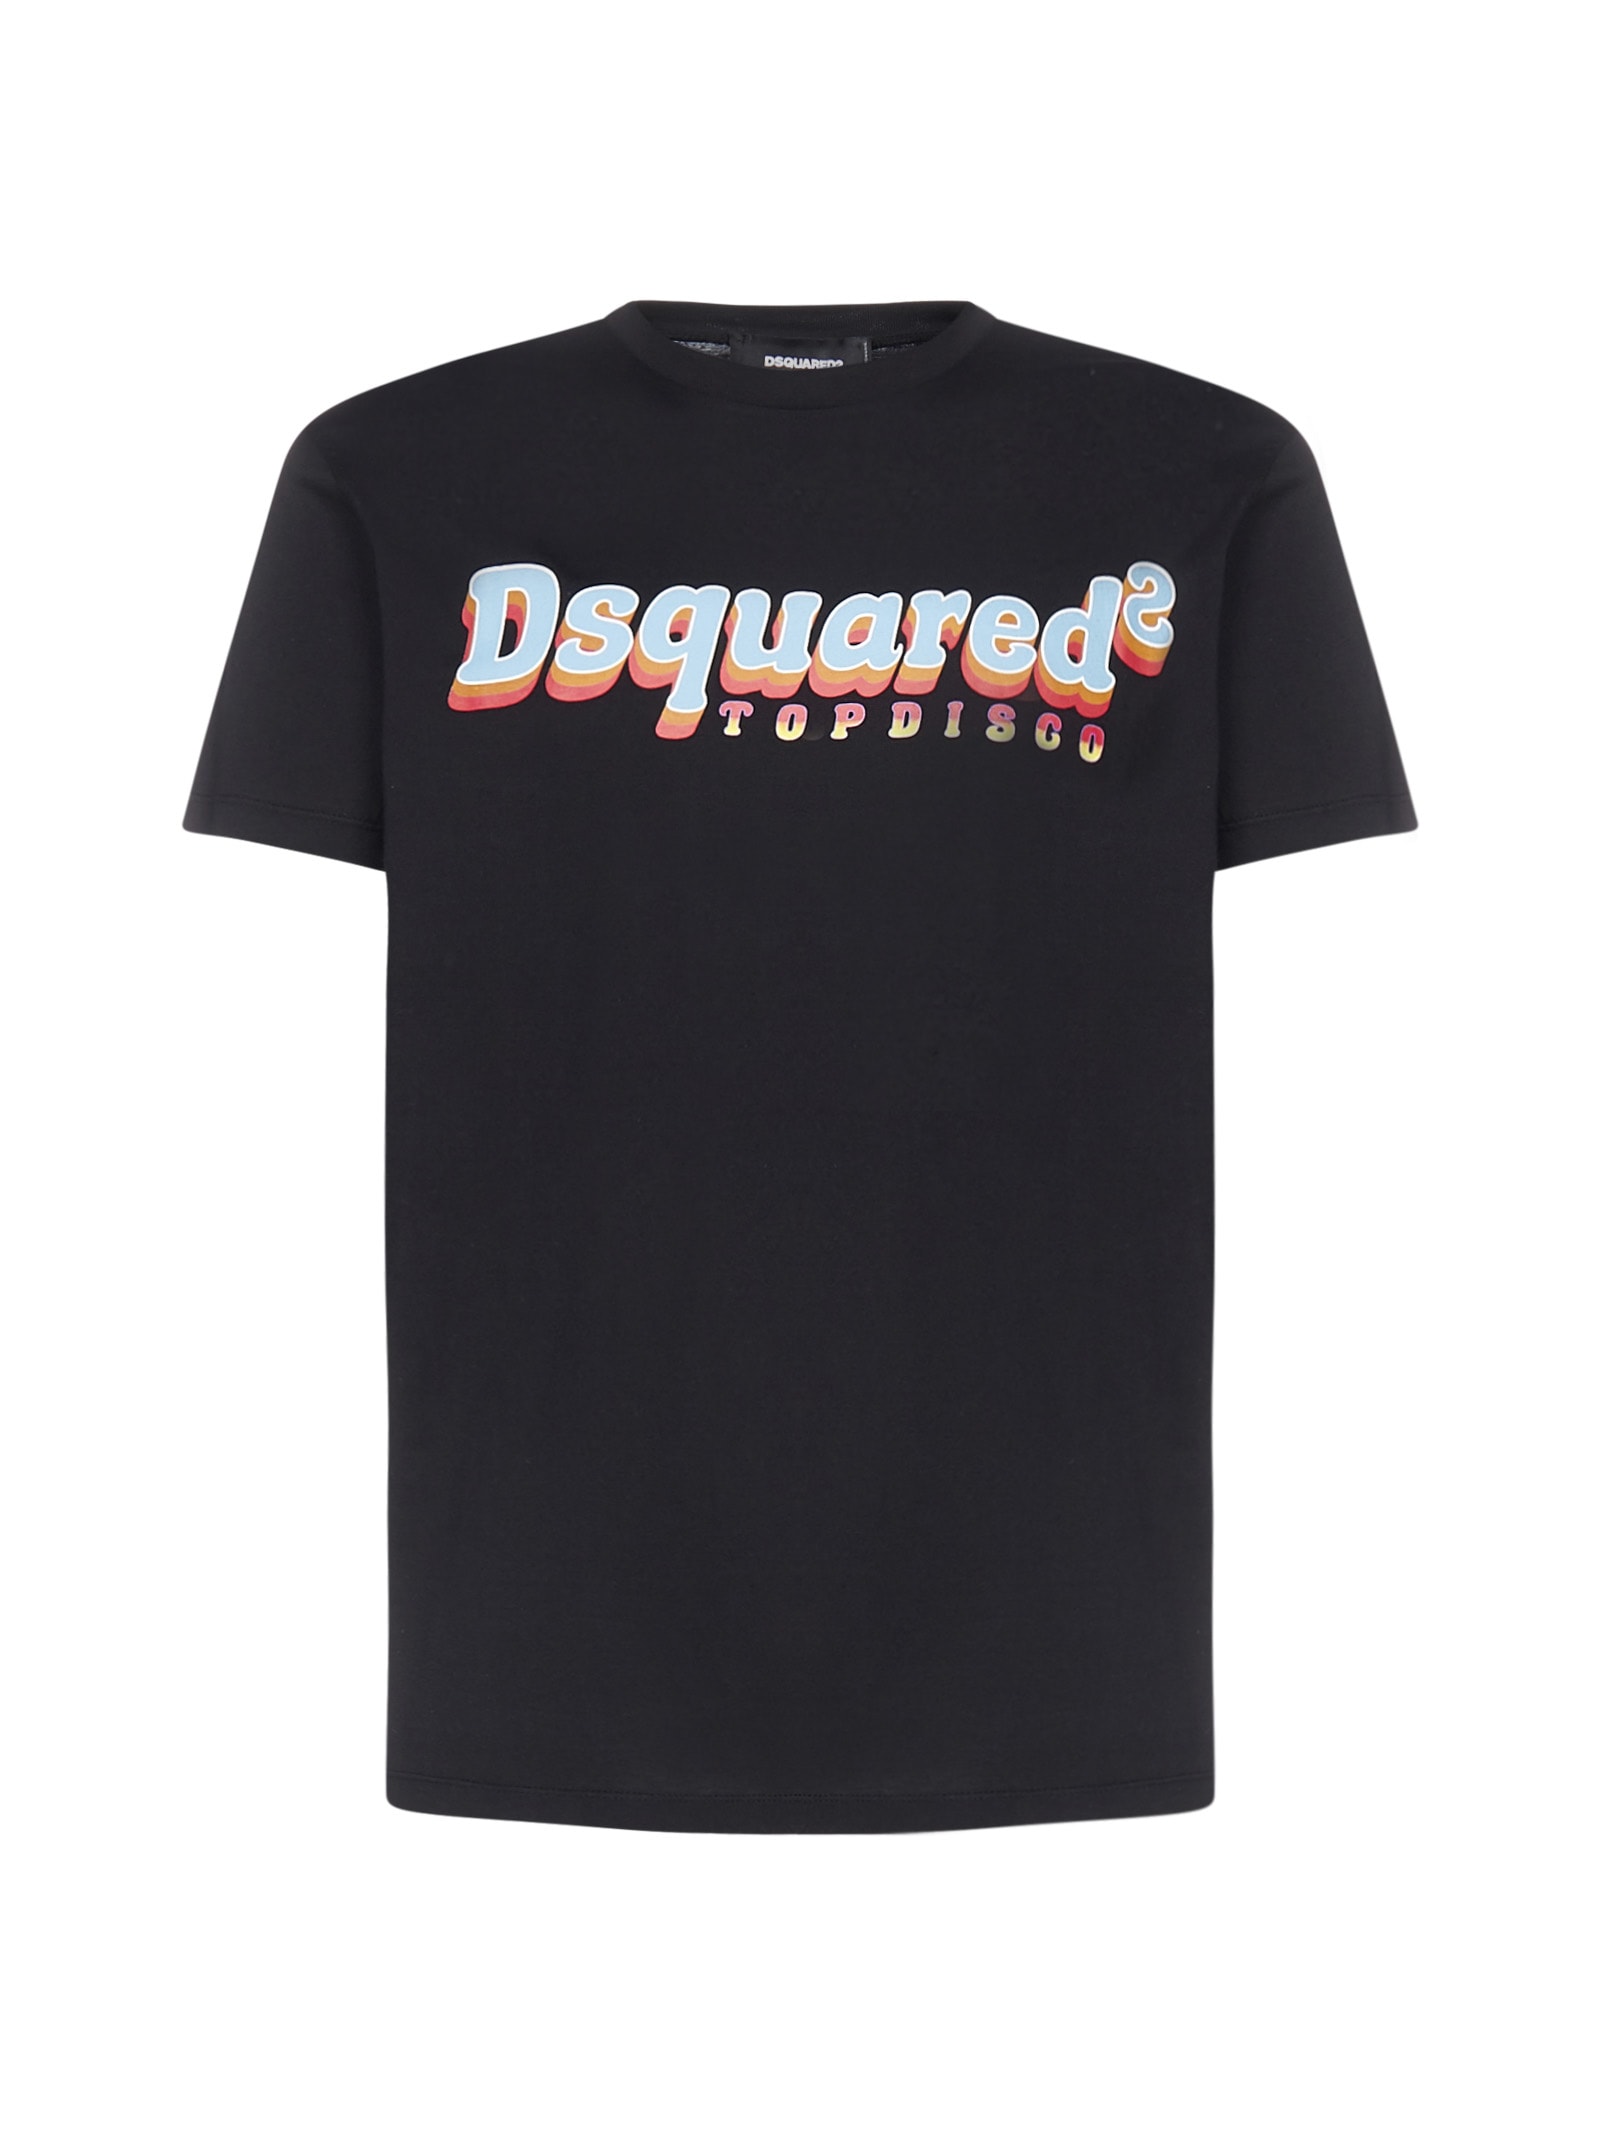 dsquared2 text logo short sleeve t-shirt